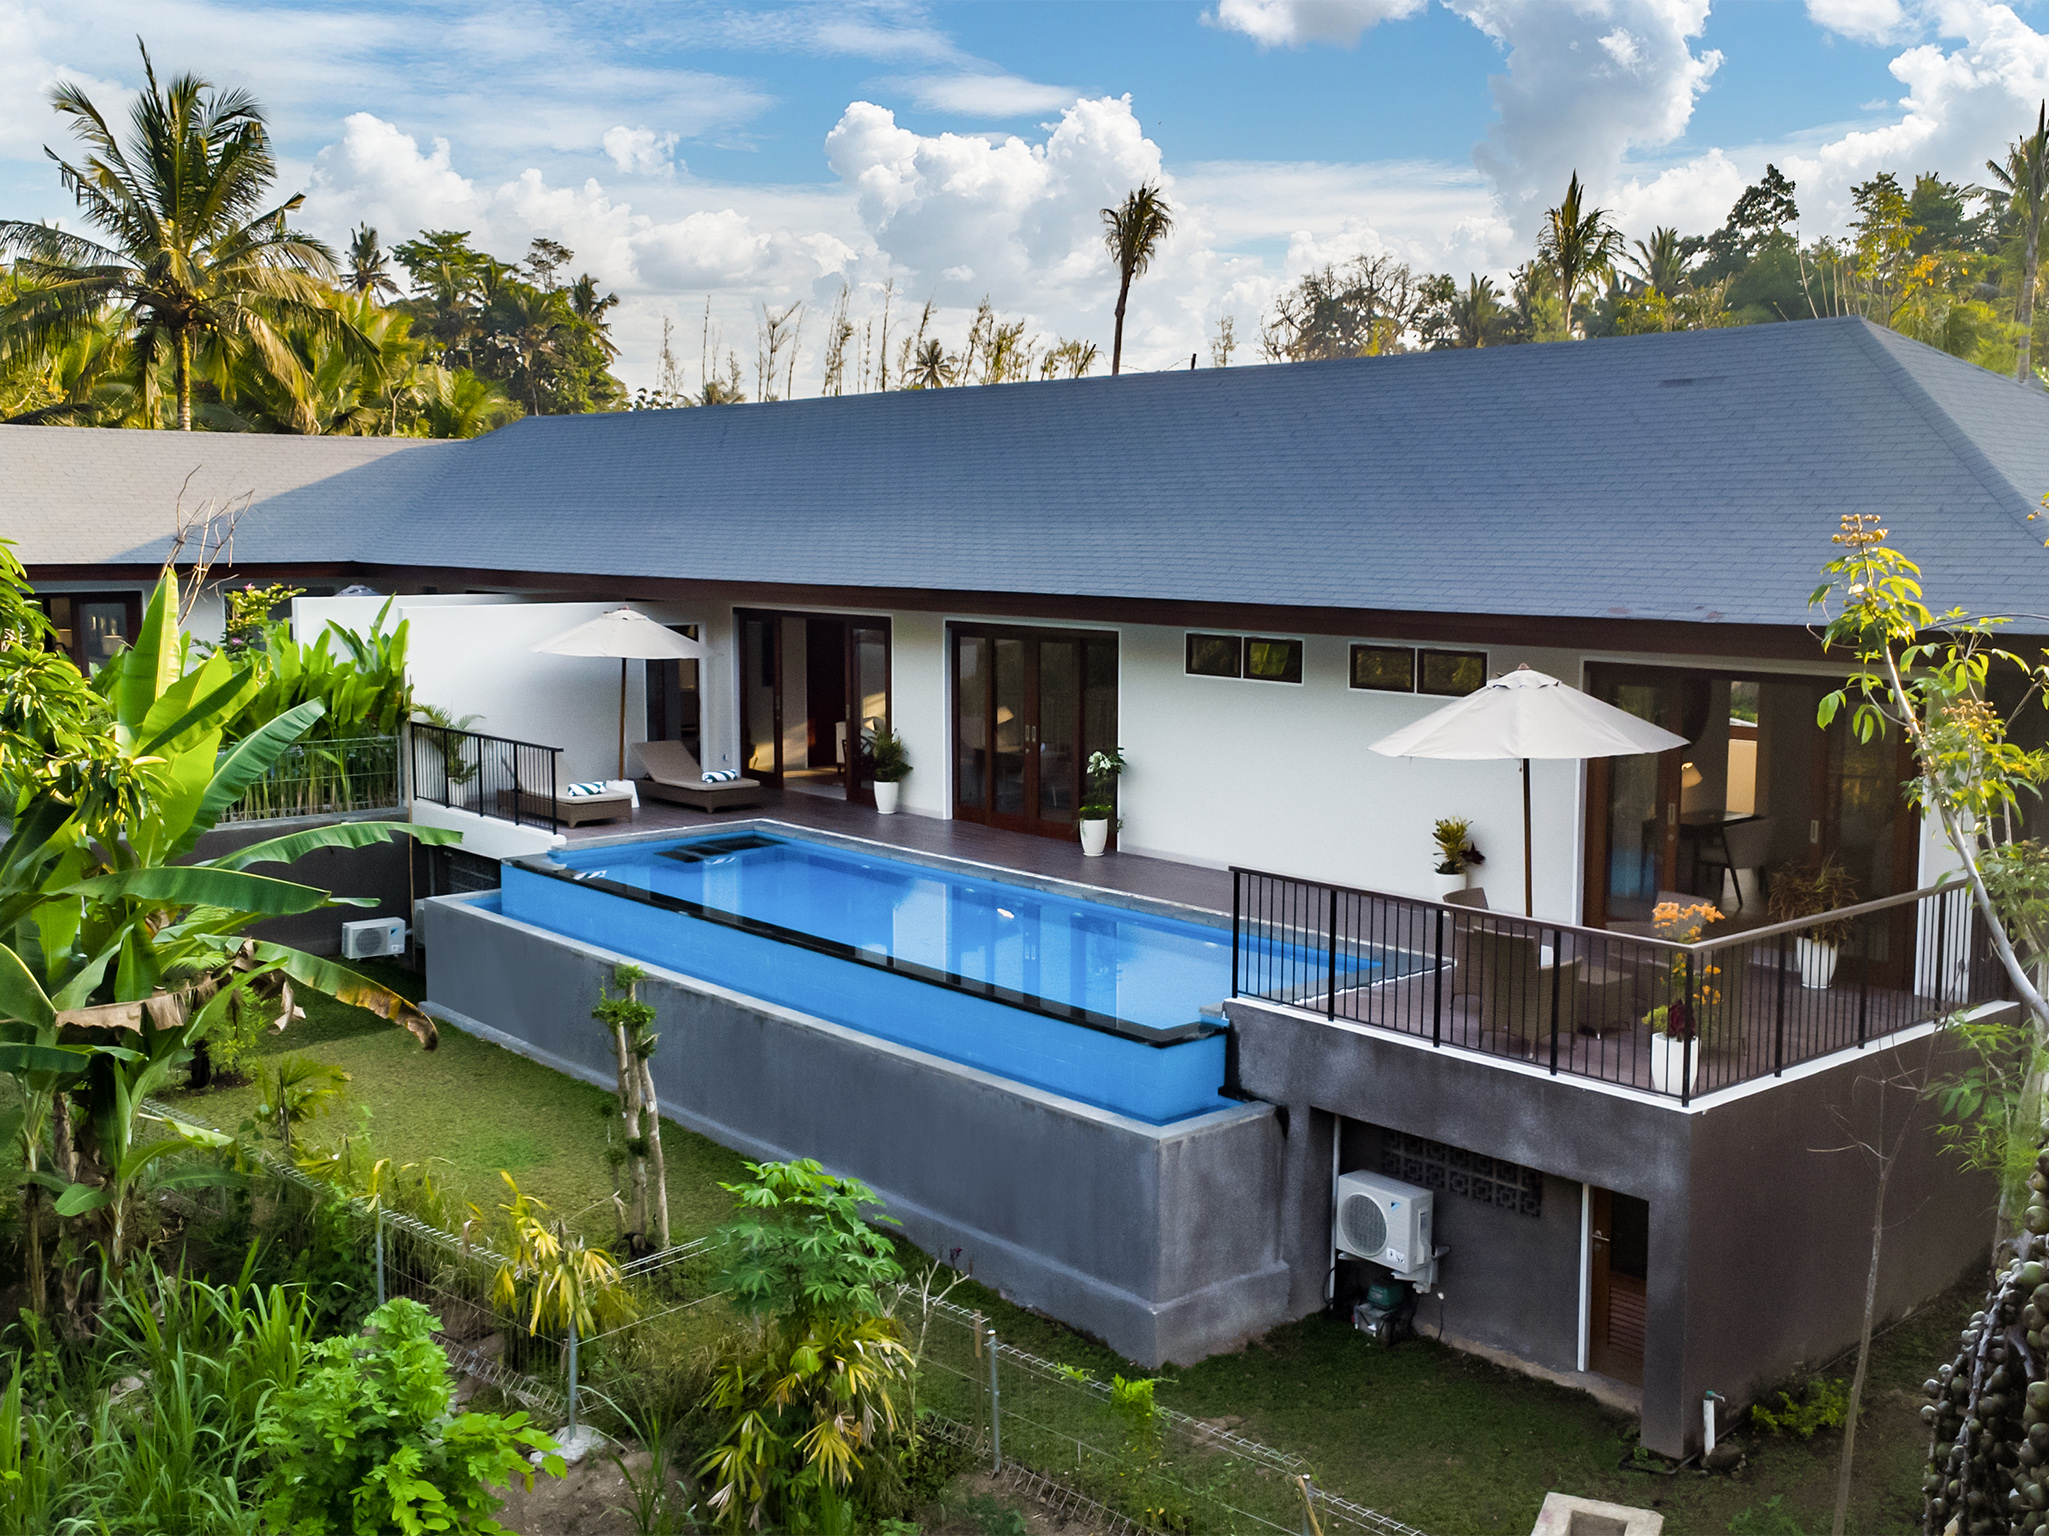 Pala Ubud - Villa Seraya A - Modern classic tropical riverside villa